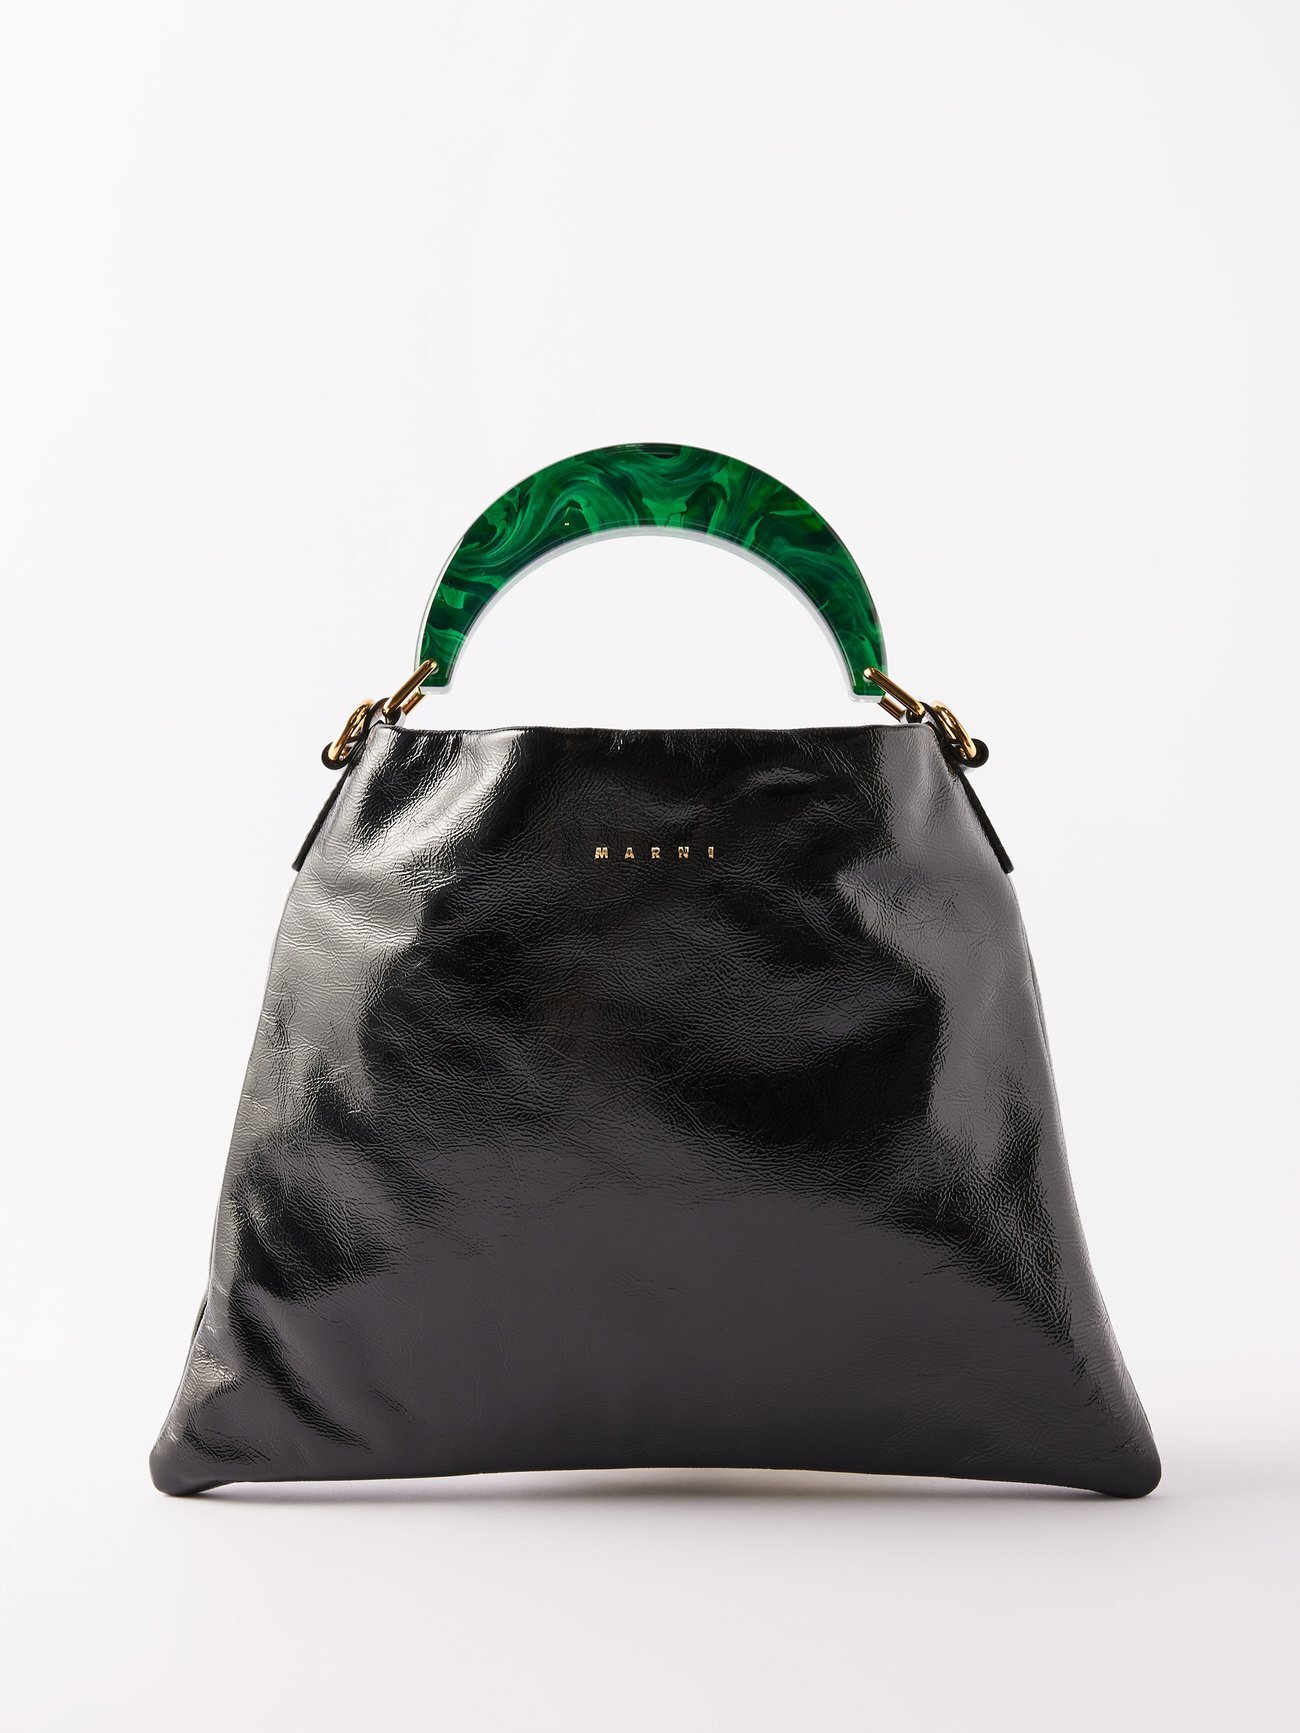 Marni - Venice Patent-leather Bag - Womens - Black